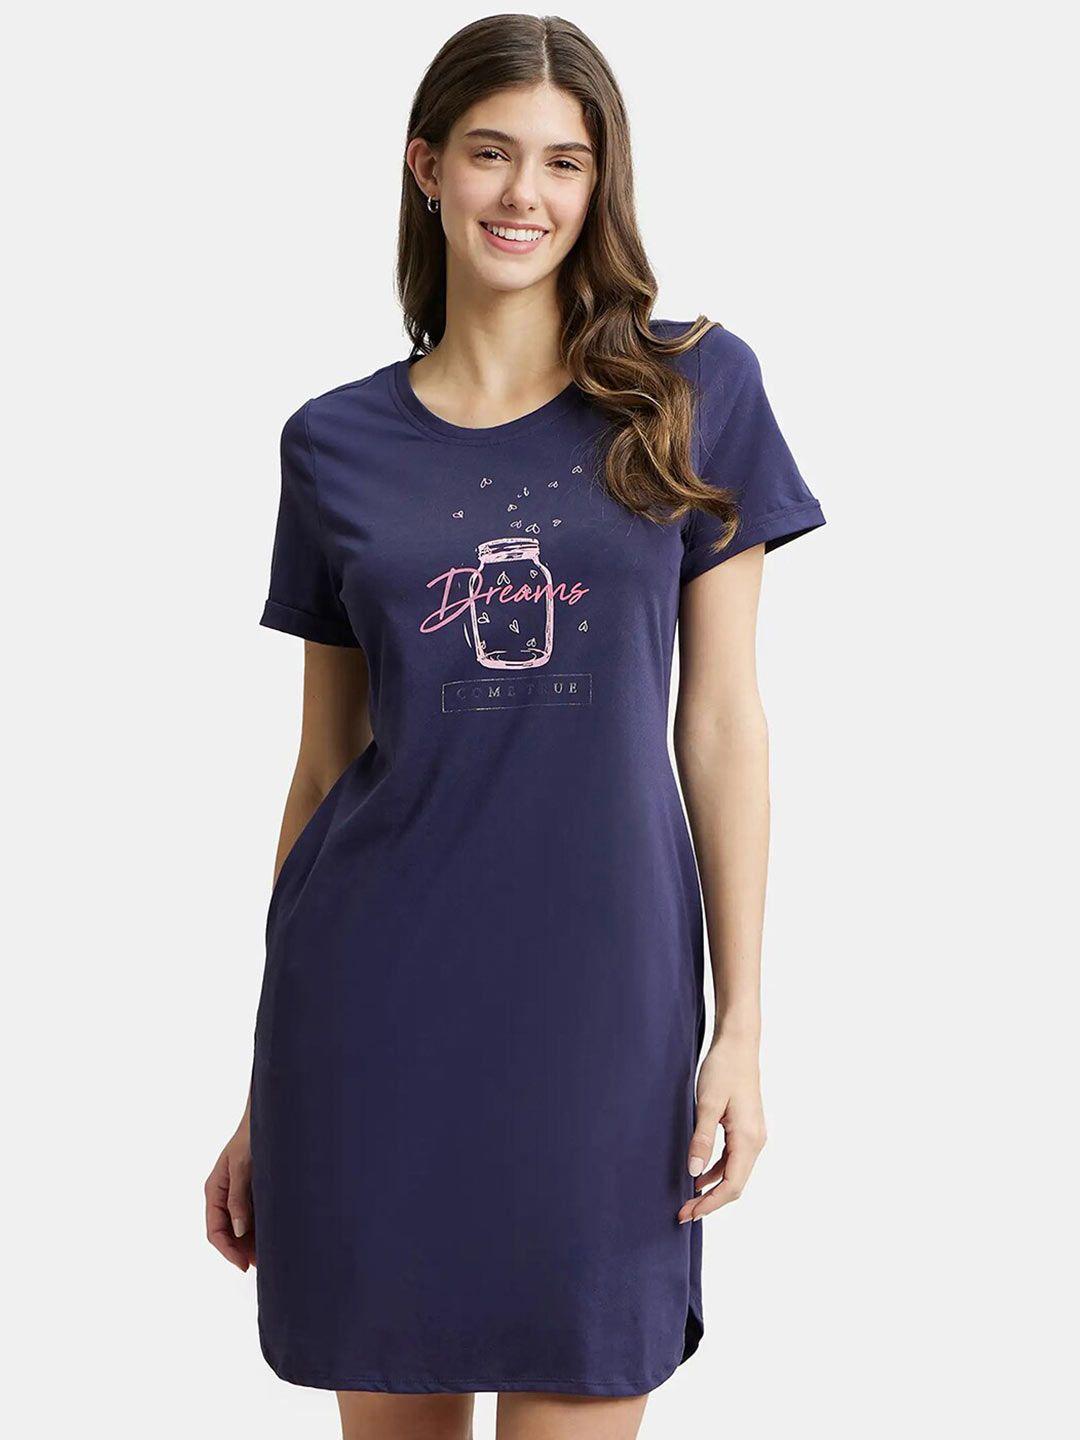 jockey-graphic-printed-short-sleeves-t-shirt-nightdress